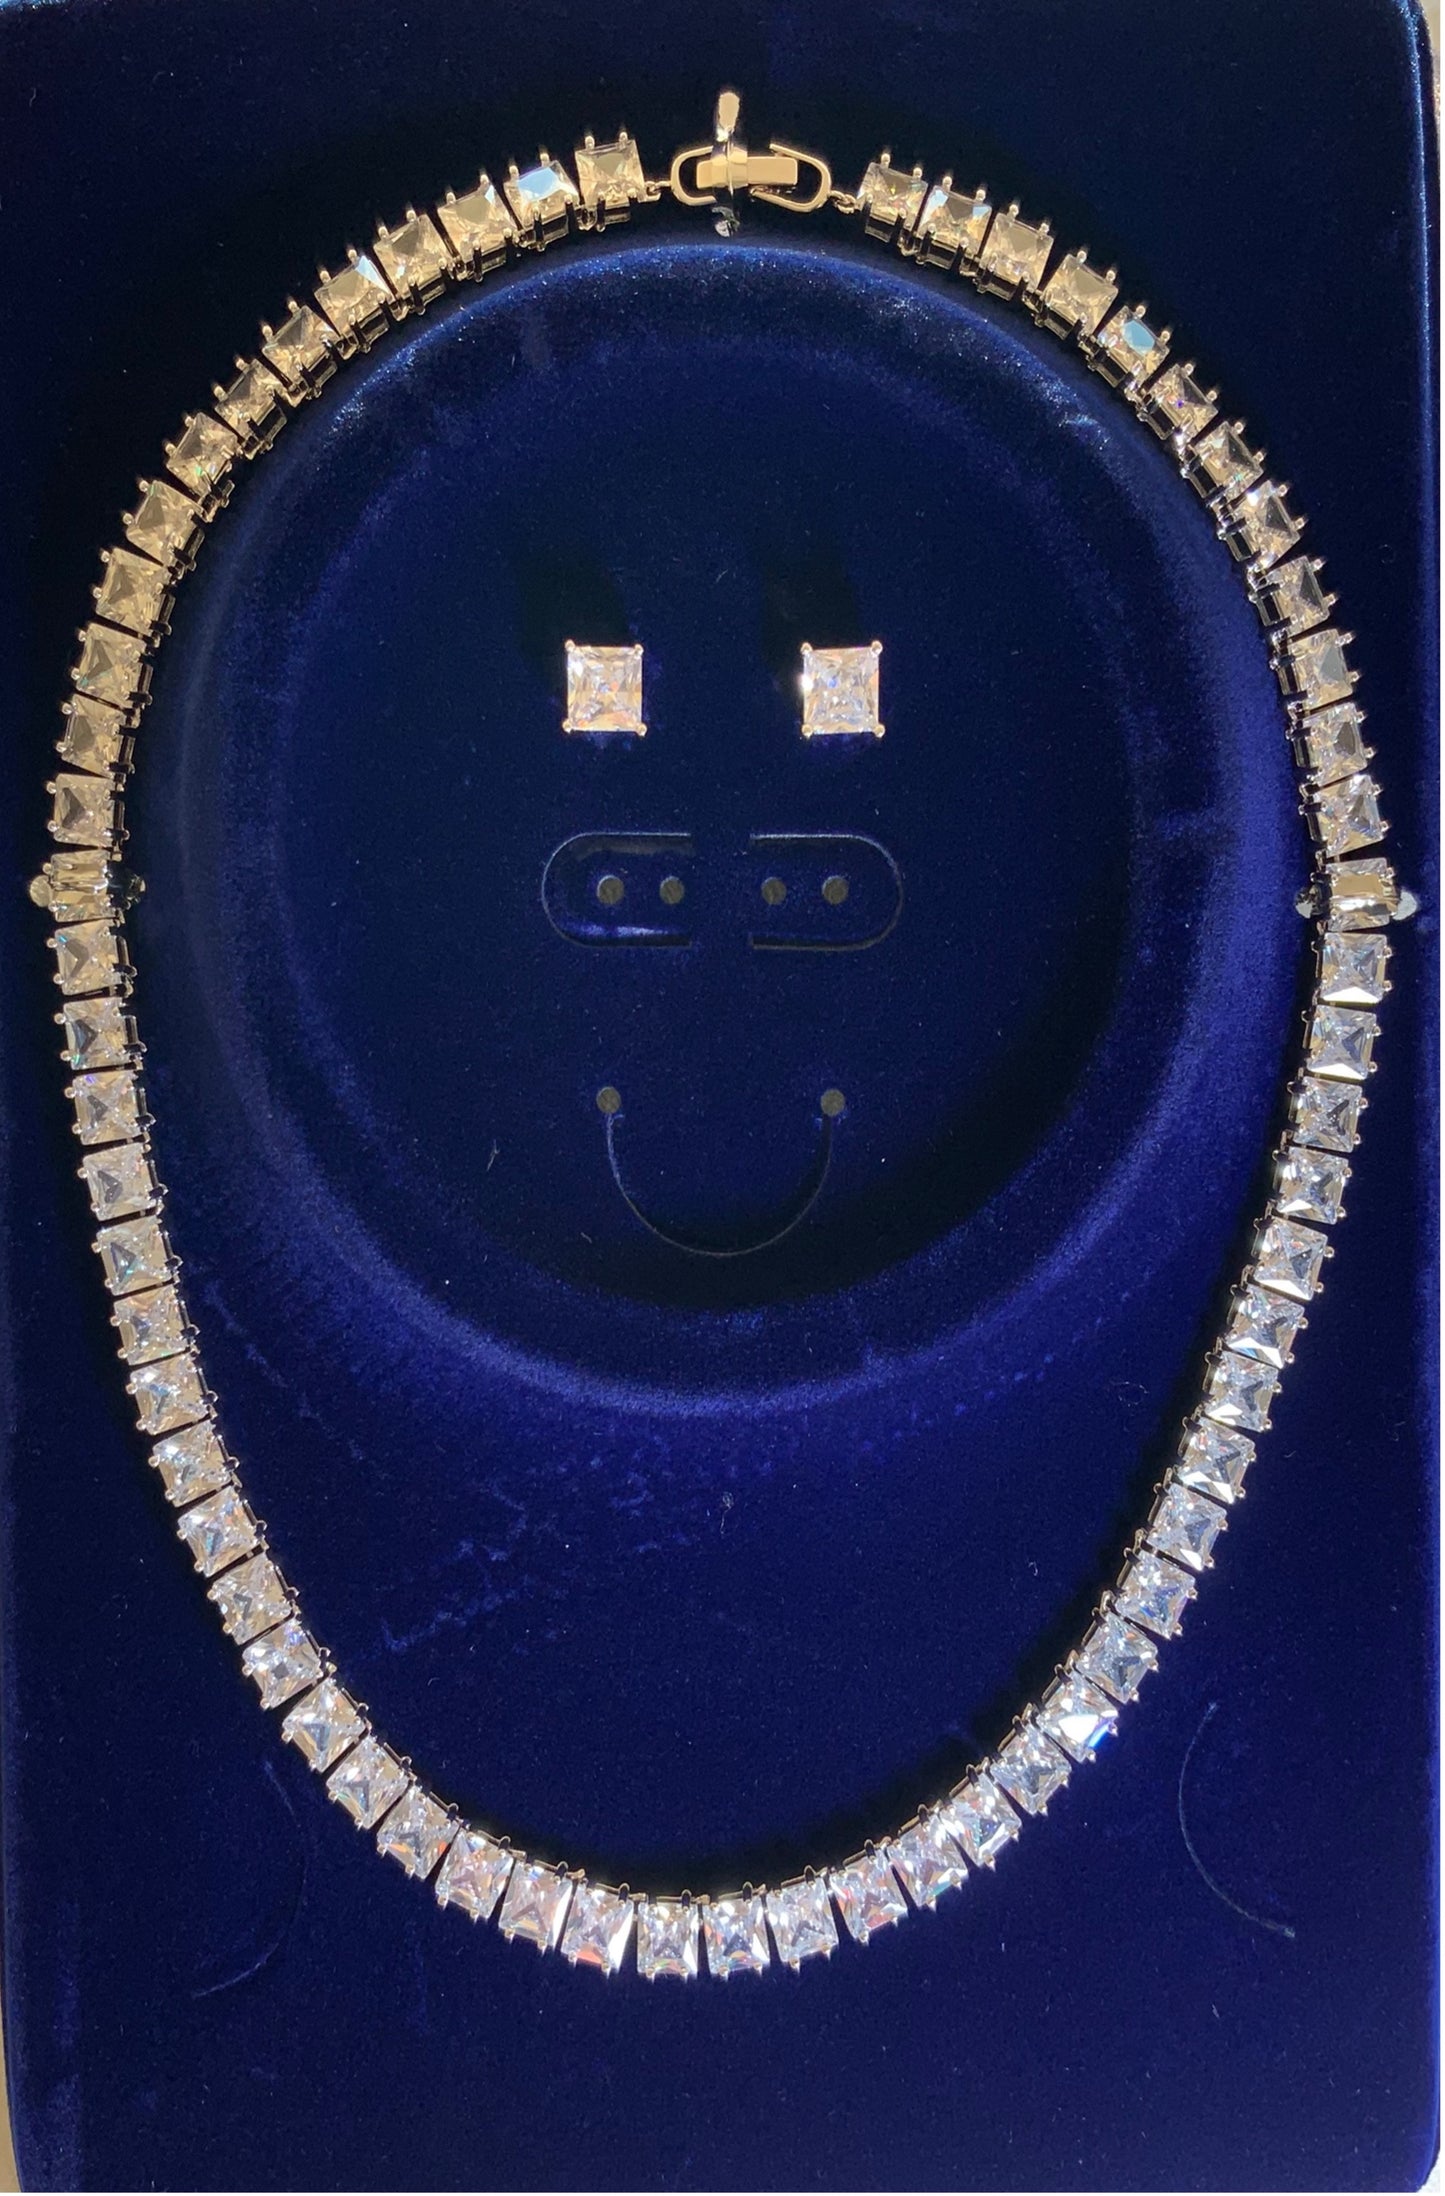 Jewelry Set Necklace Earrings 6MM Zircon Princess Cut White Gold